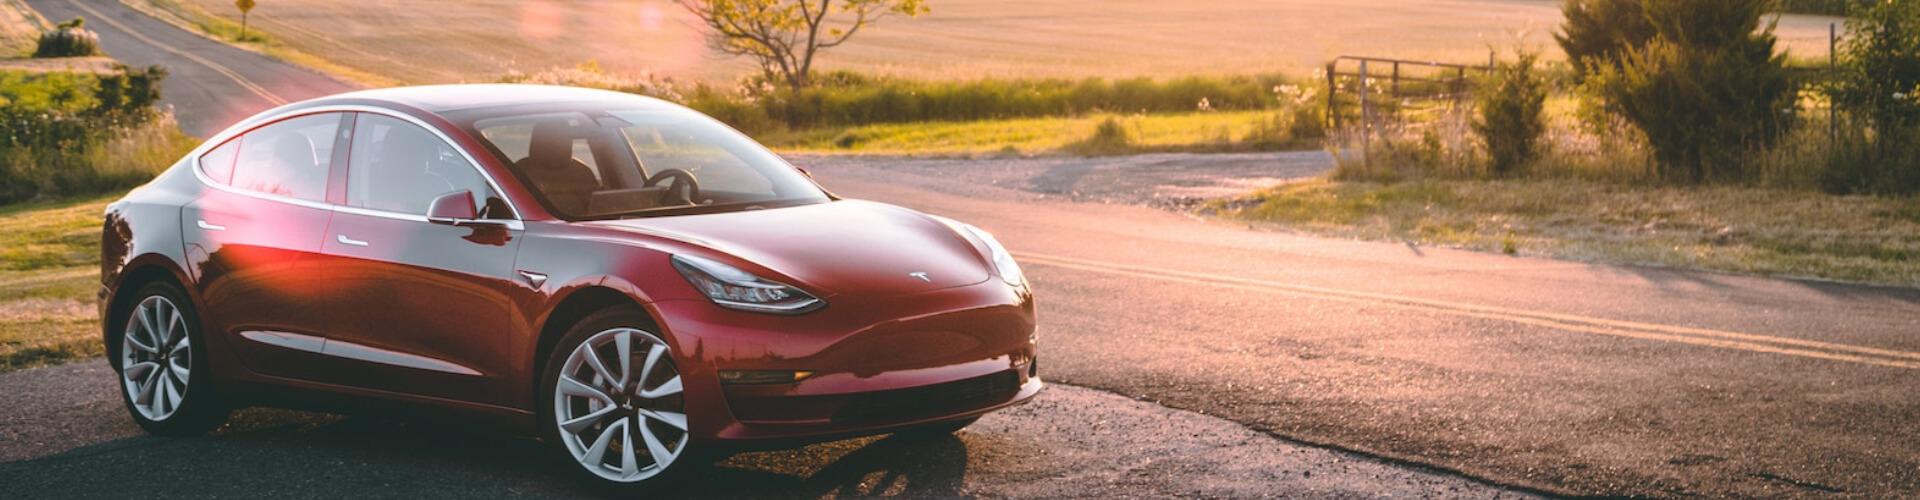 Renting de carros Tesla